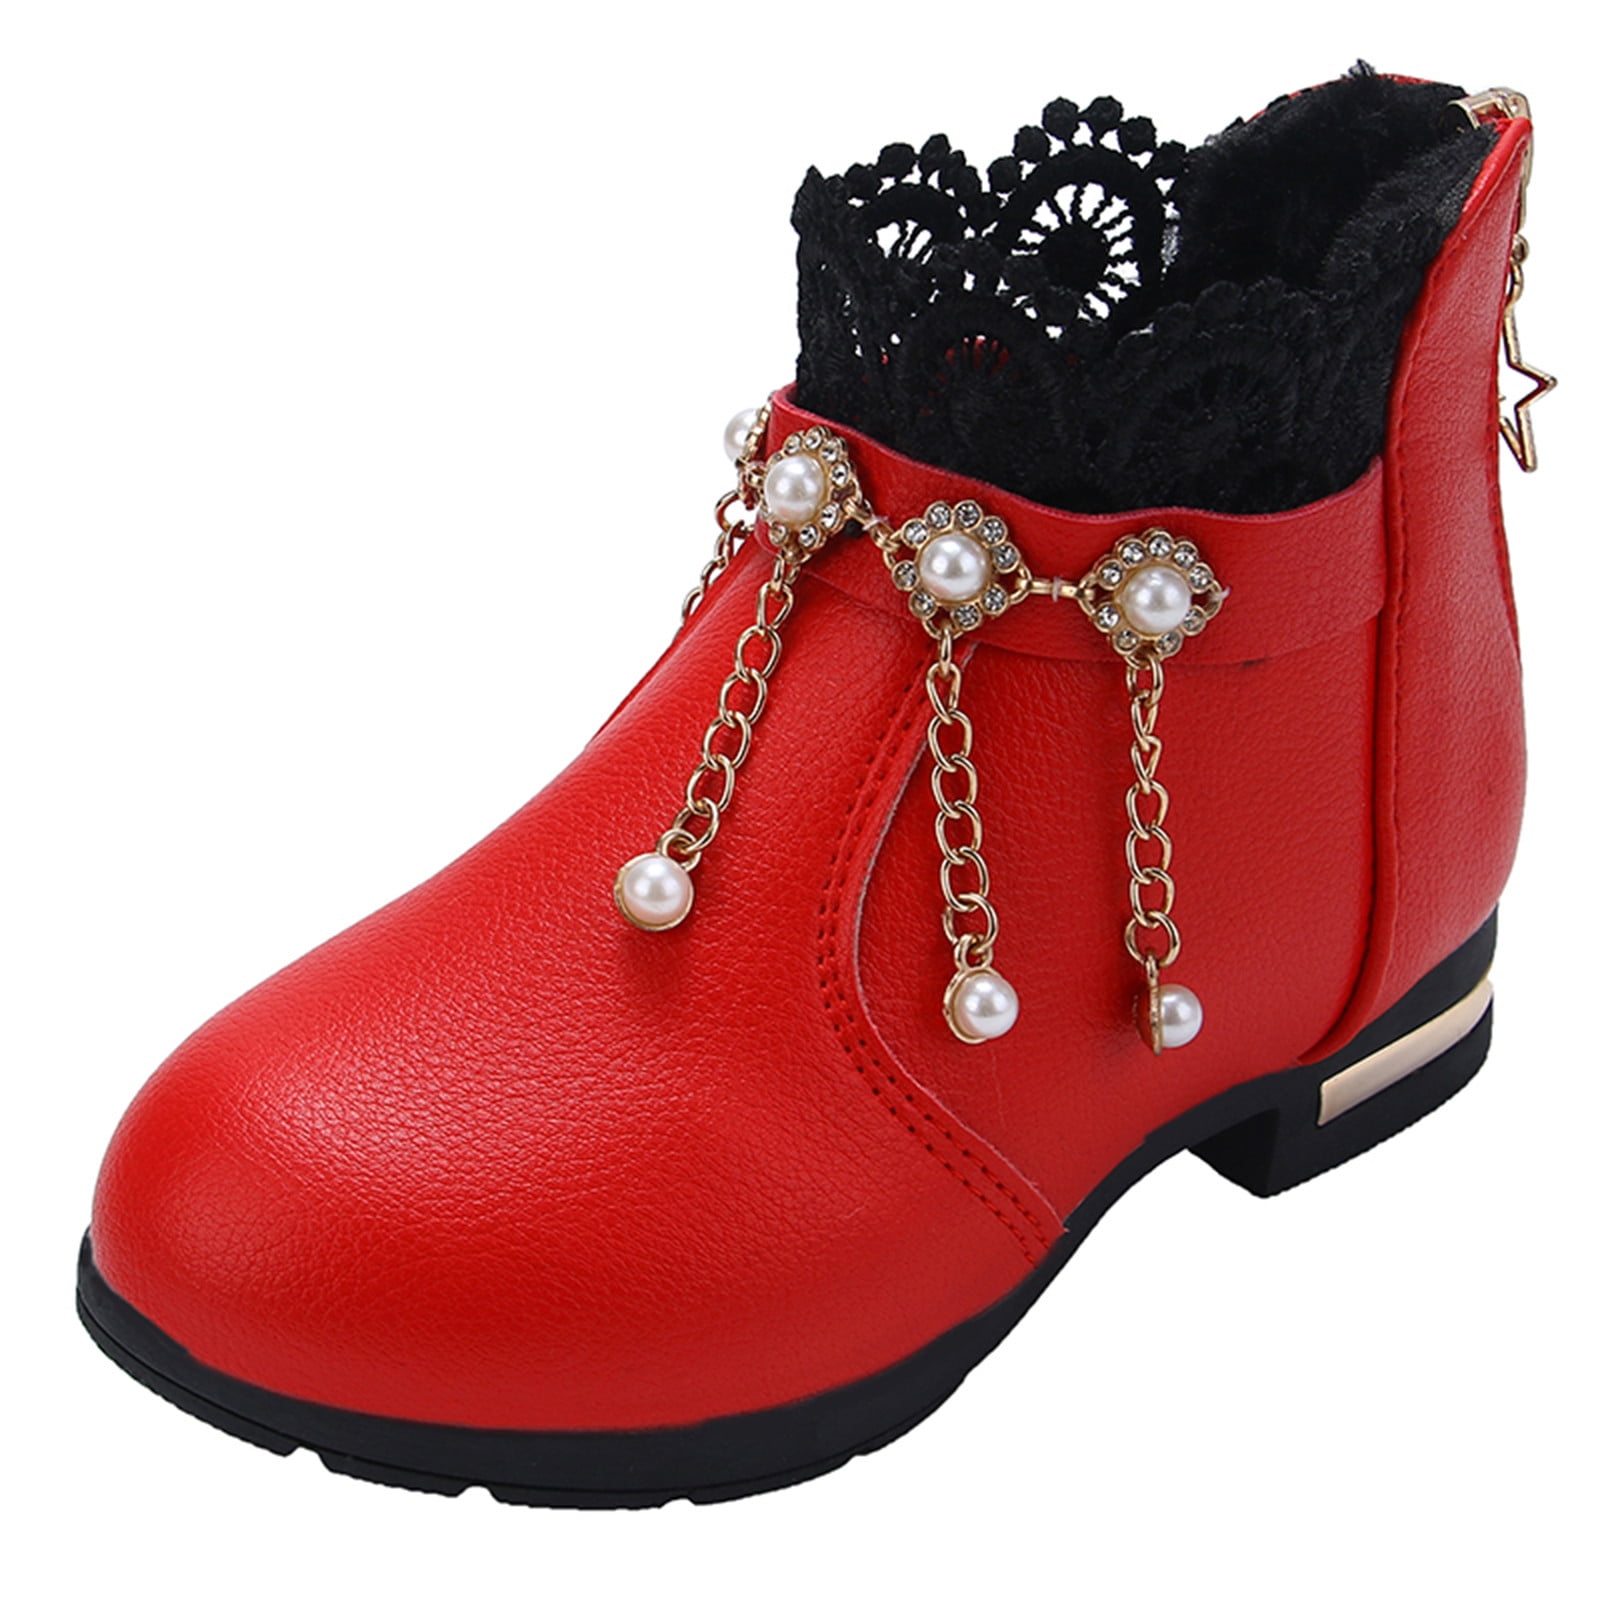 B91xZ Shoes For Girls Girls Shoes Fashion Flower Short Boots Non Slip ...